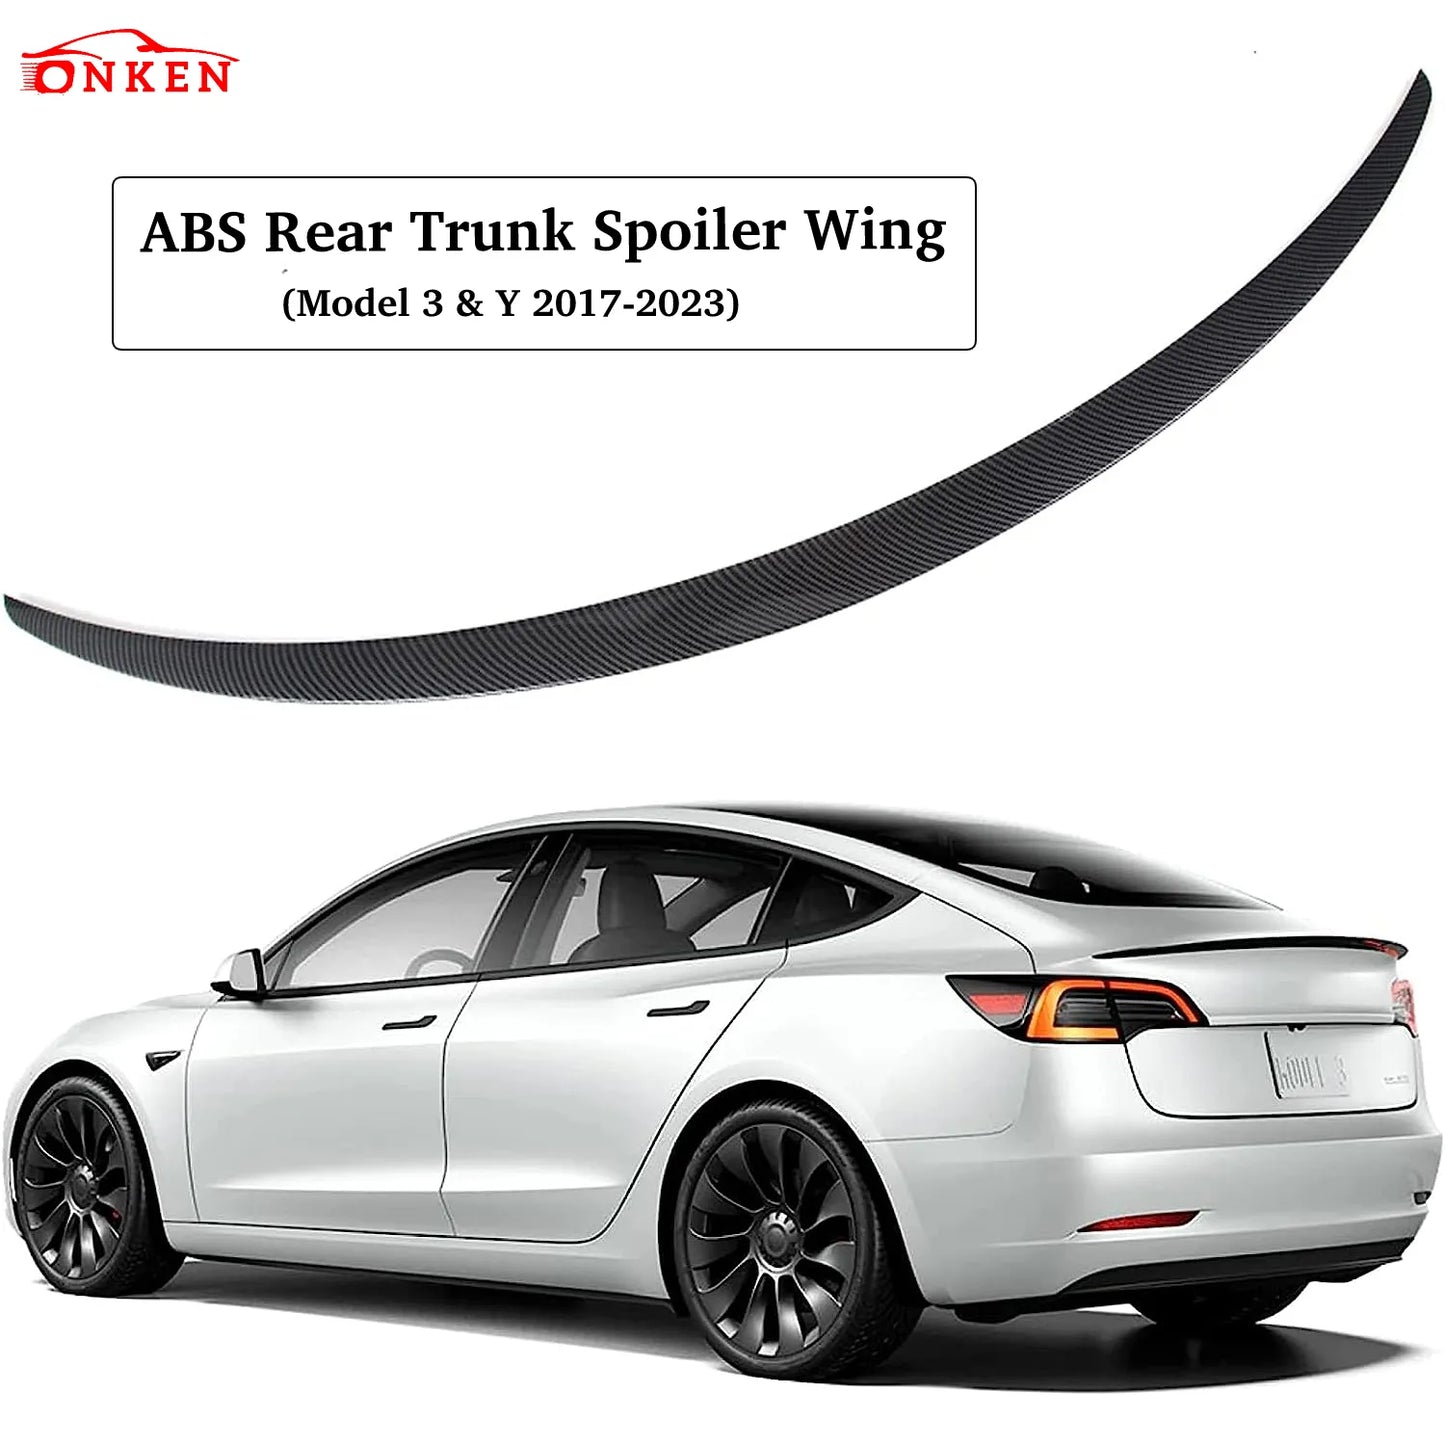 The Ultimate Rear Spoiler Wings for Your Tesla Model 3 & Model Y